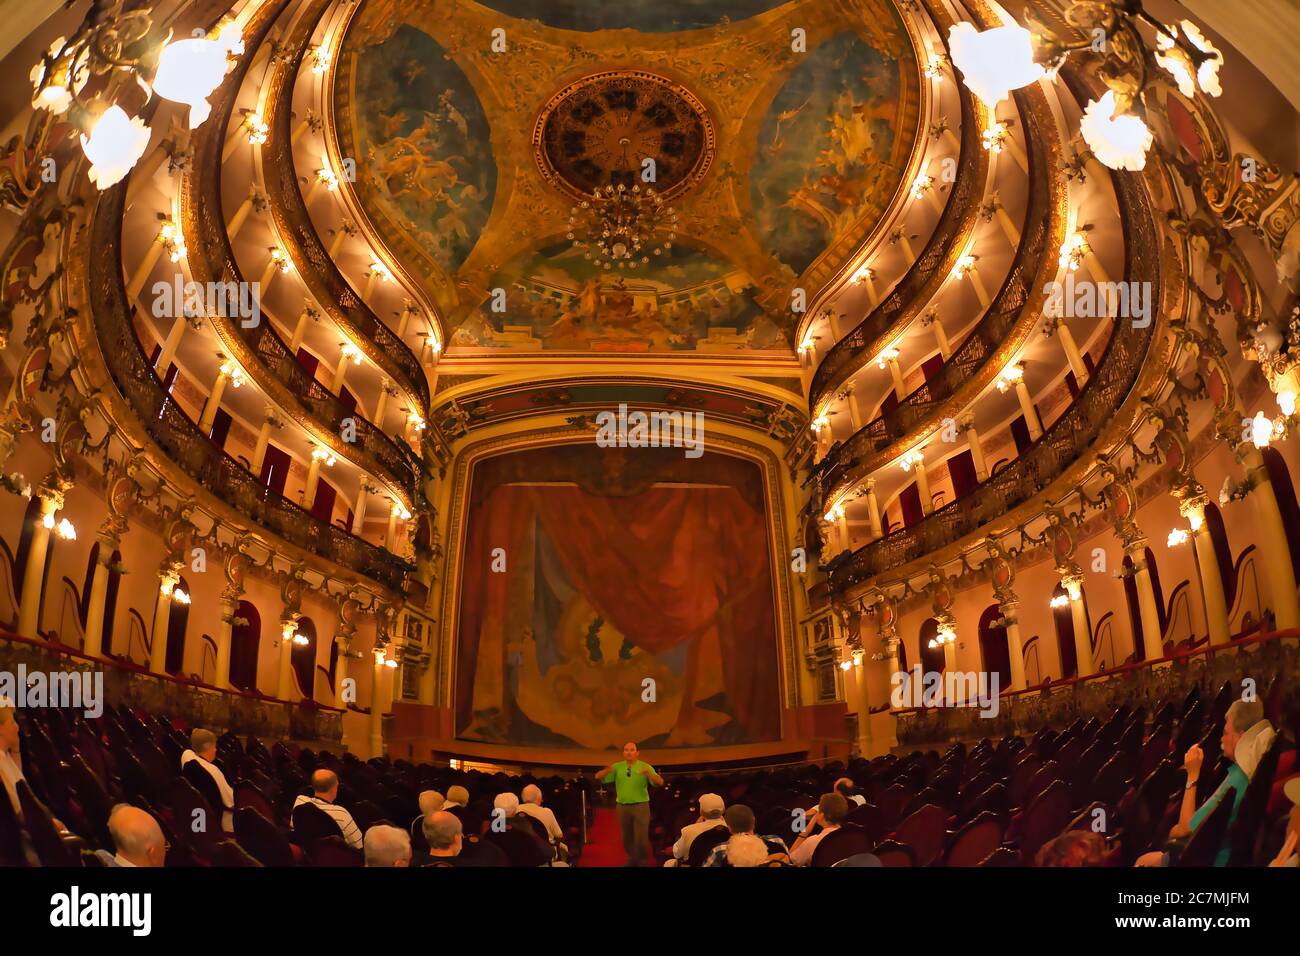 The interior of the celebrated Opera House in Manaus, Amazonas State, Brazil Stock Photo